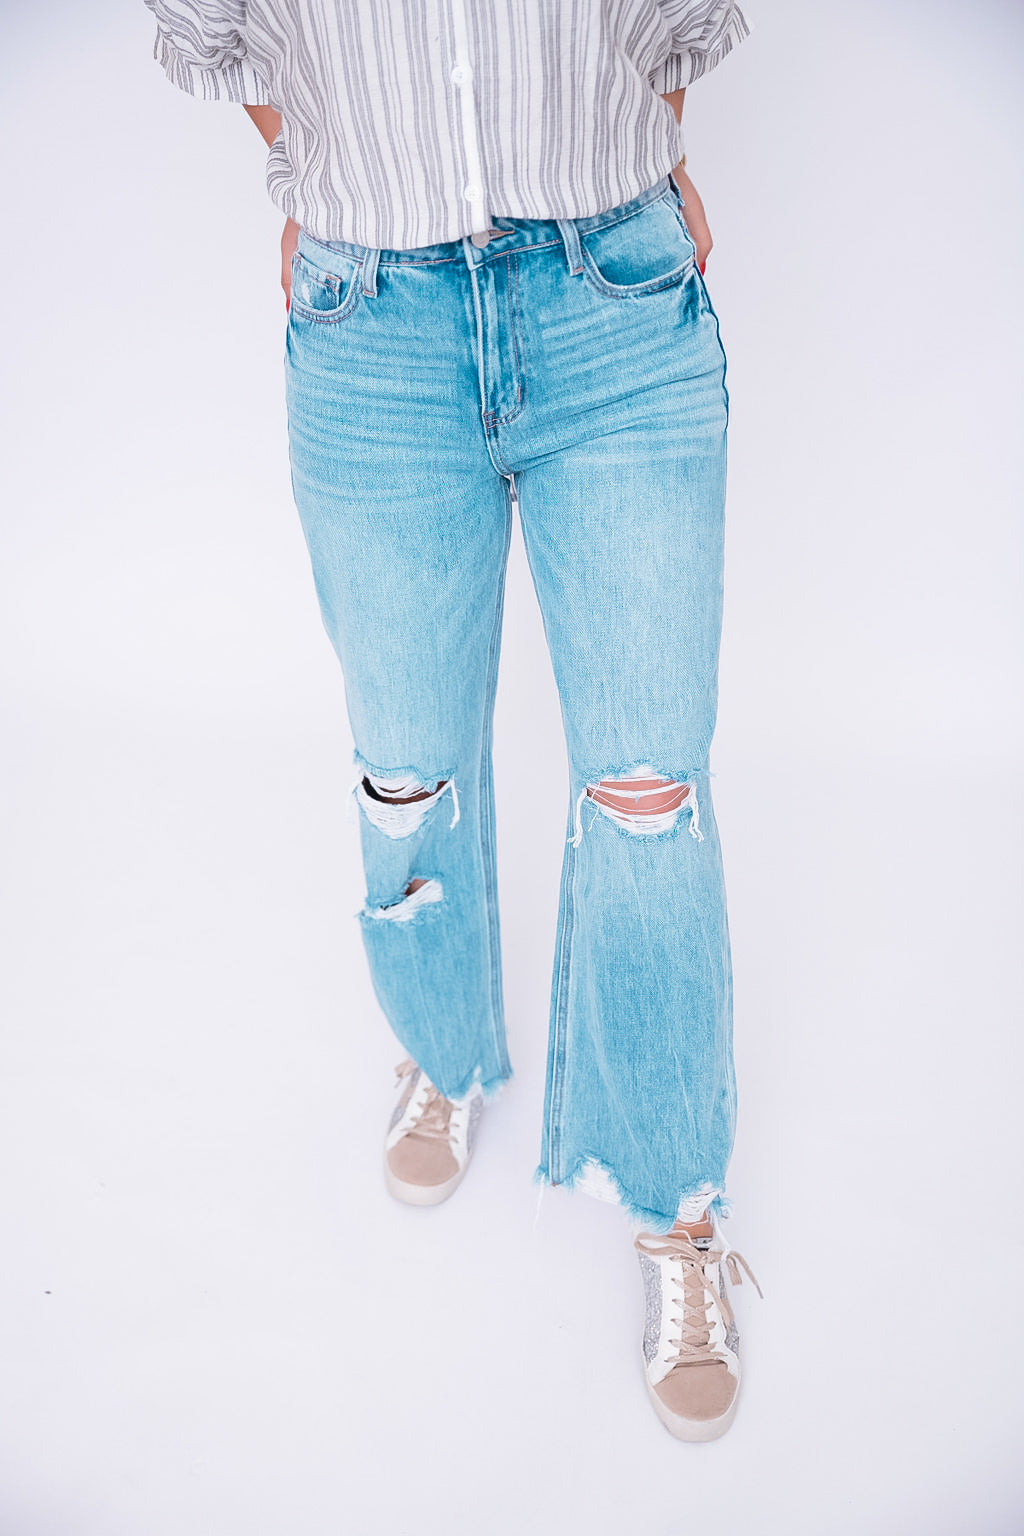 Khloe 90’s vintage high rise jeans